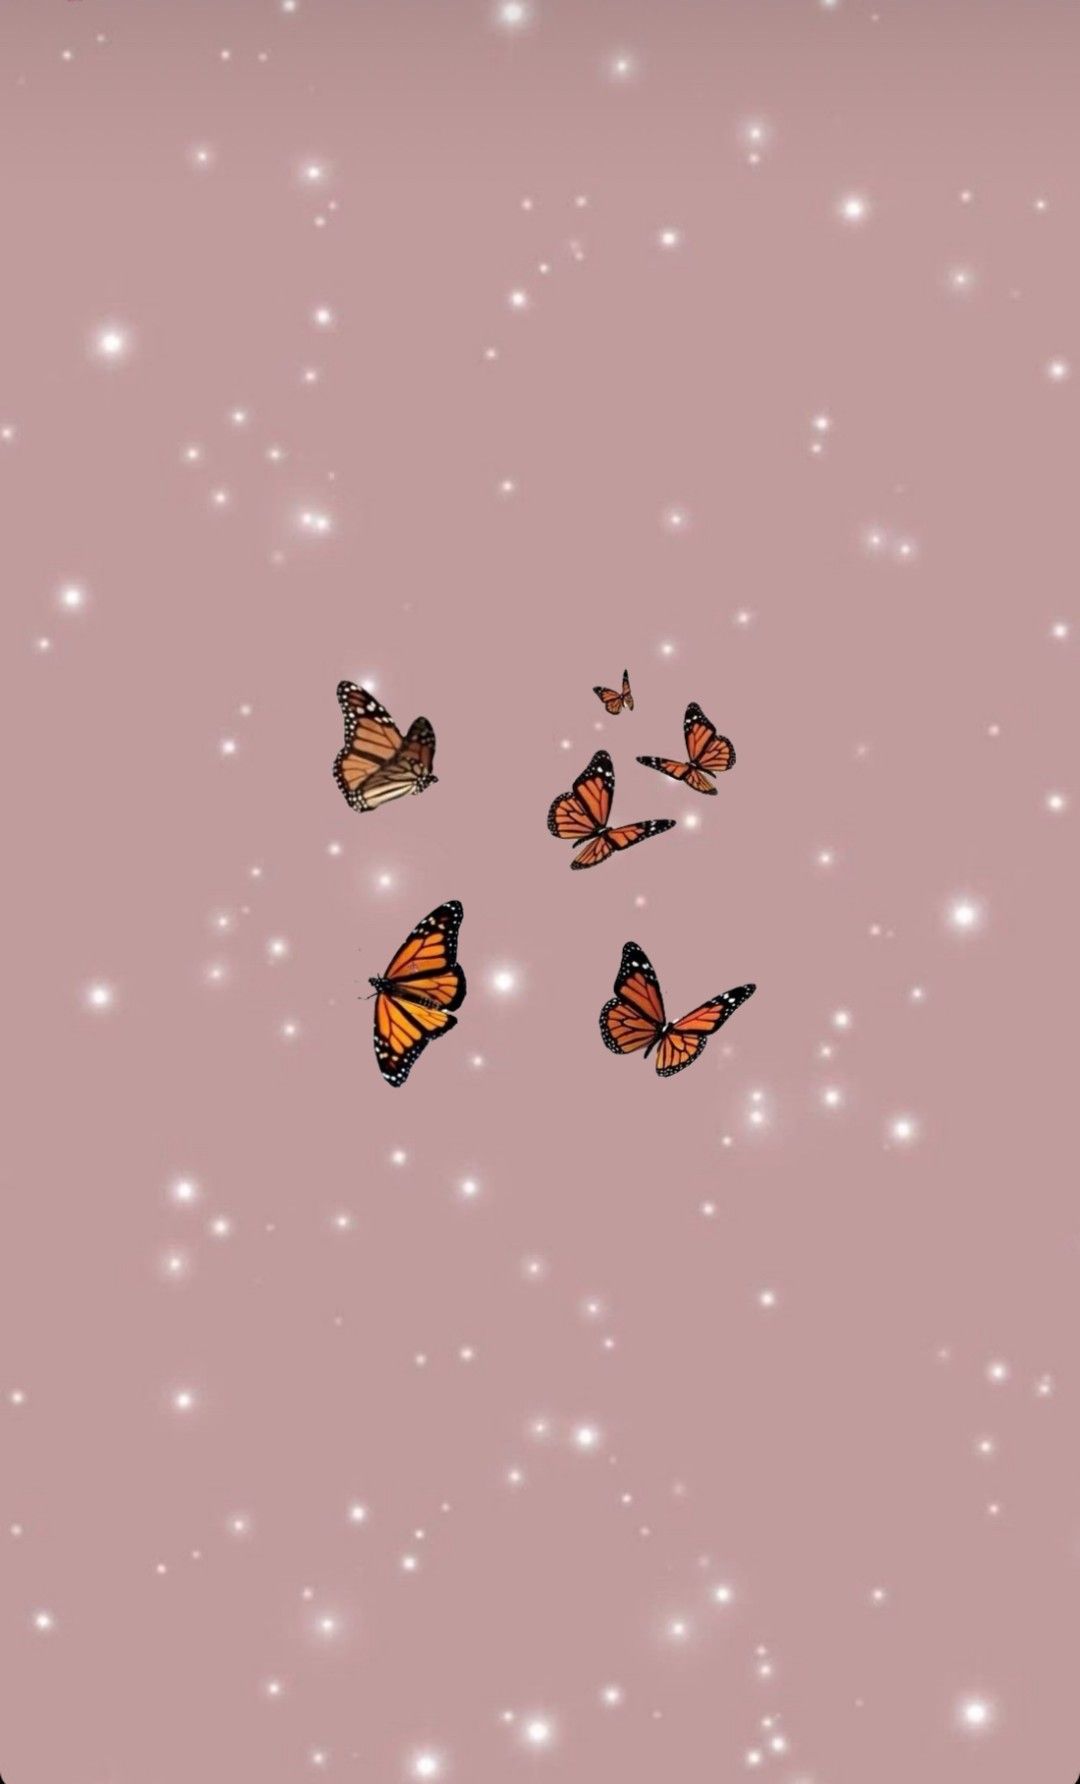 wallpaper aesthetic butterflies Image by °wallpaper•